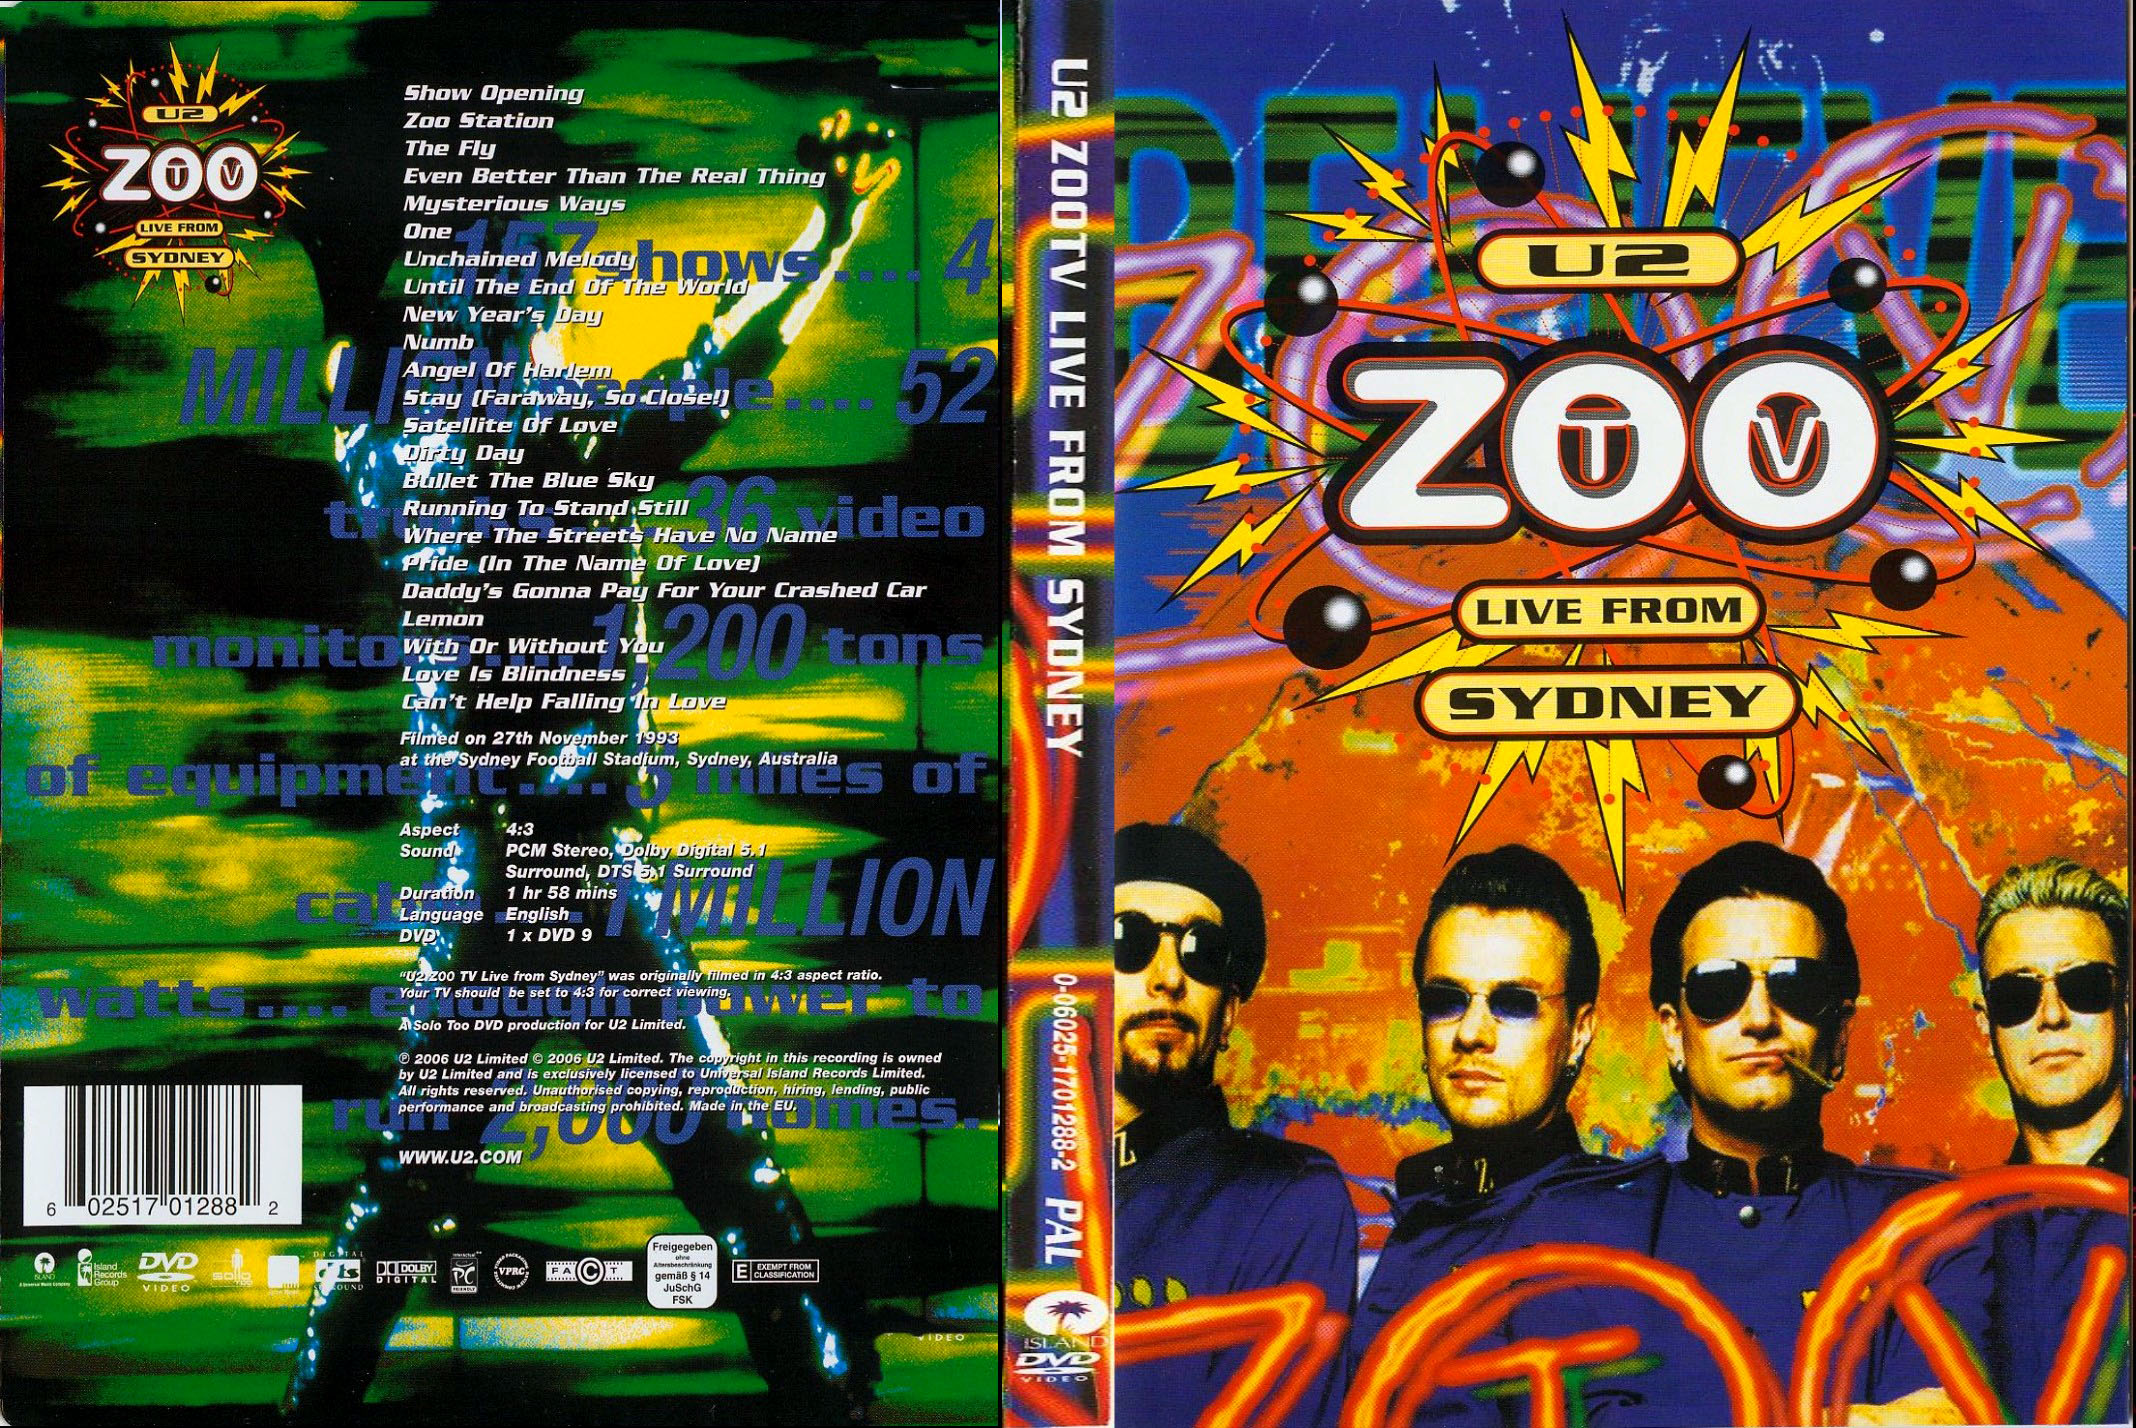 Jaquette DVD U2 zoo tv live sydney